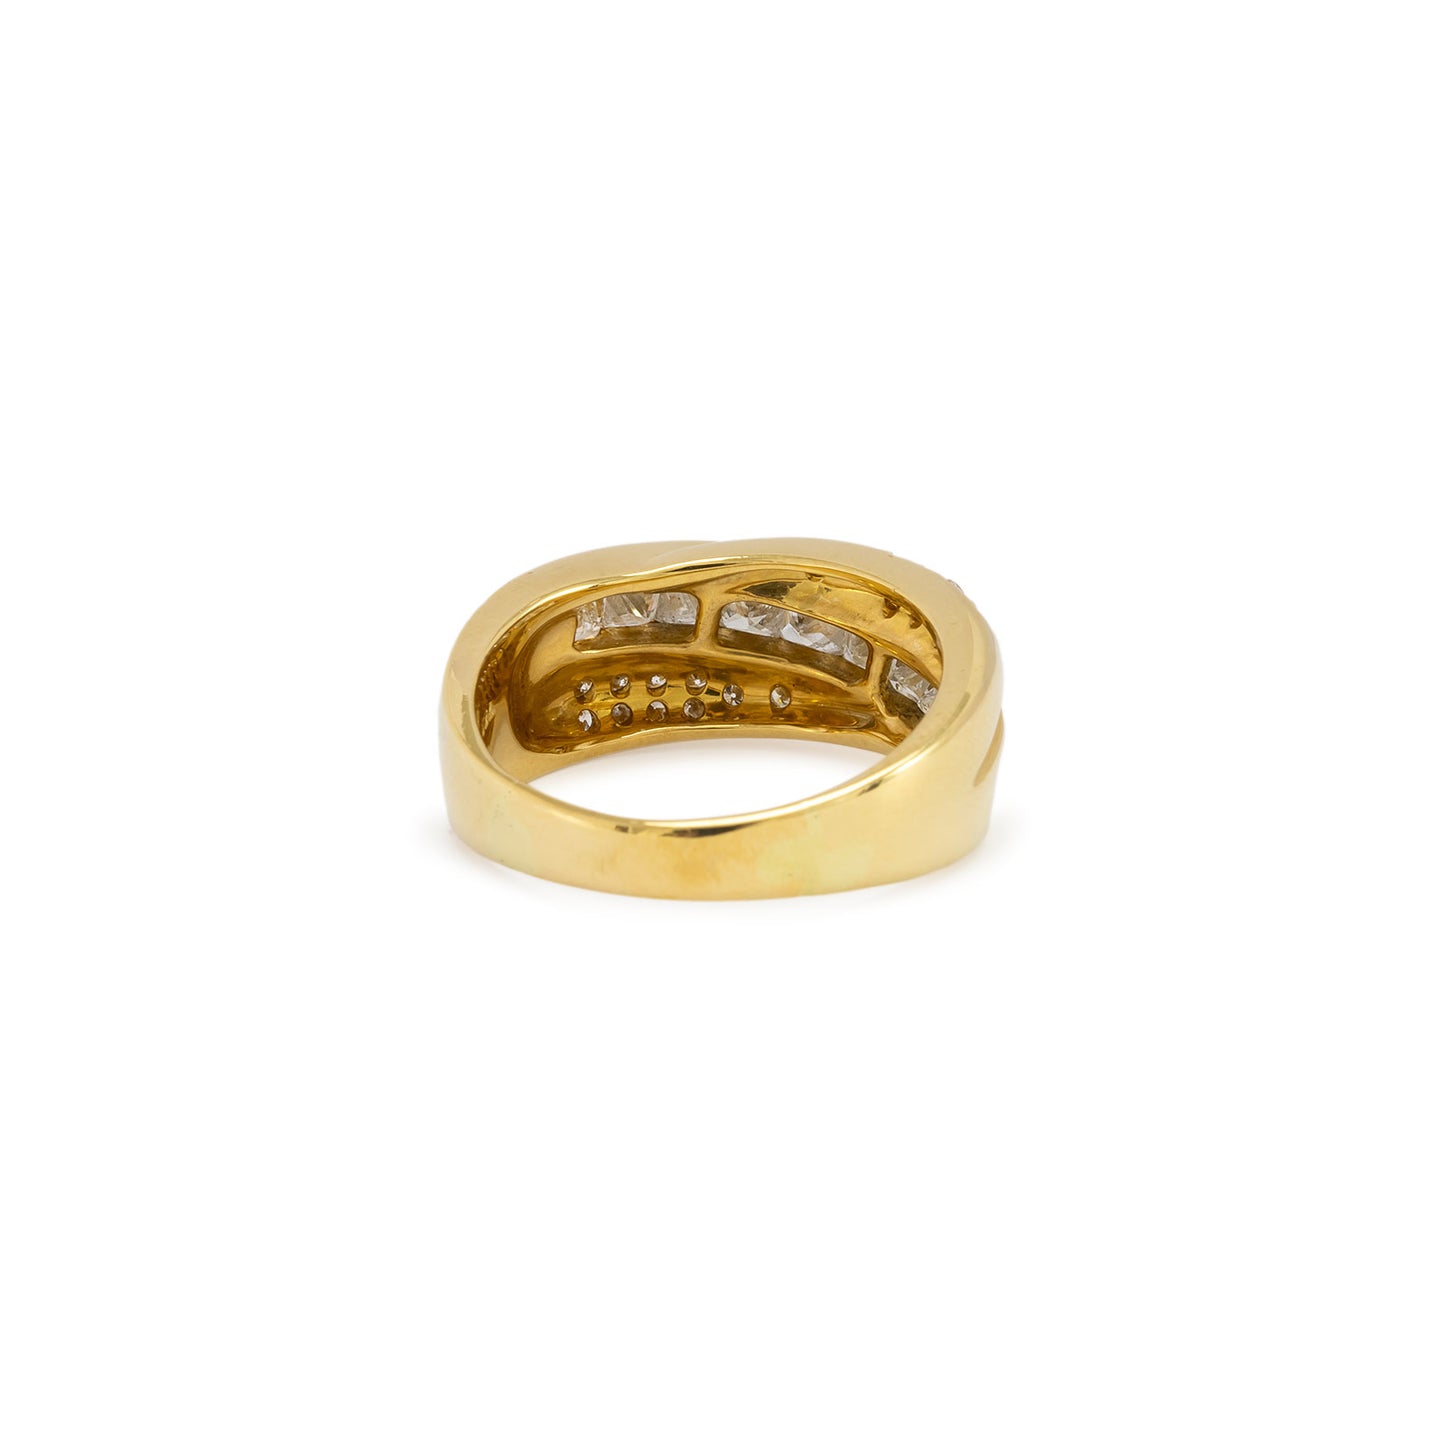 Diamond ring yellow gold 750 18K set women's ring diamond jewelry gold ring 